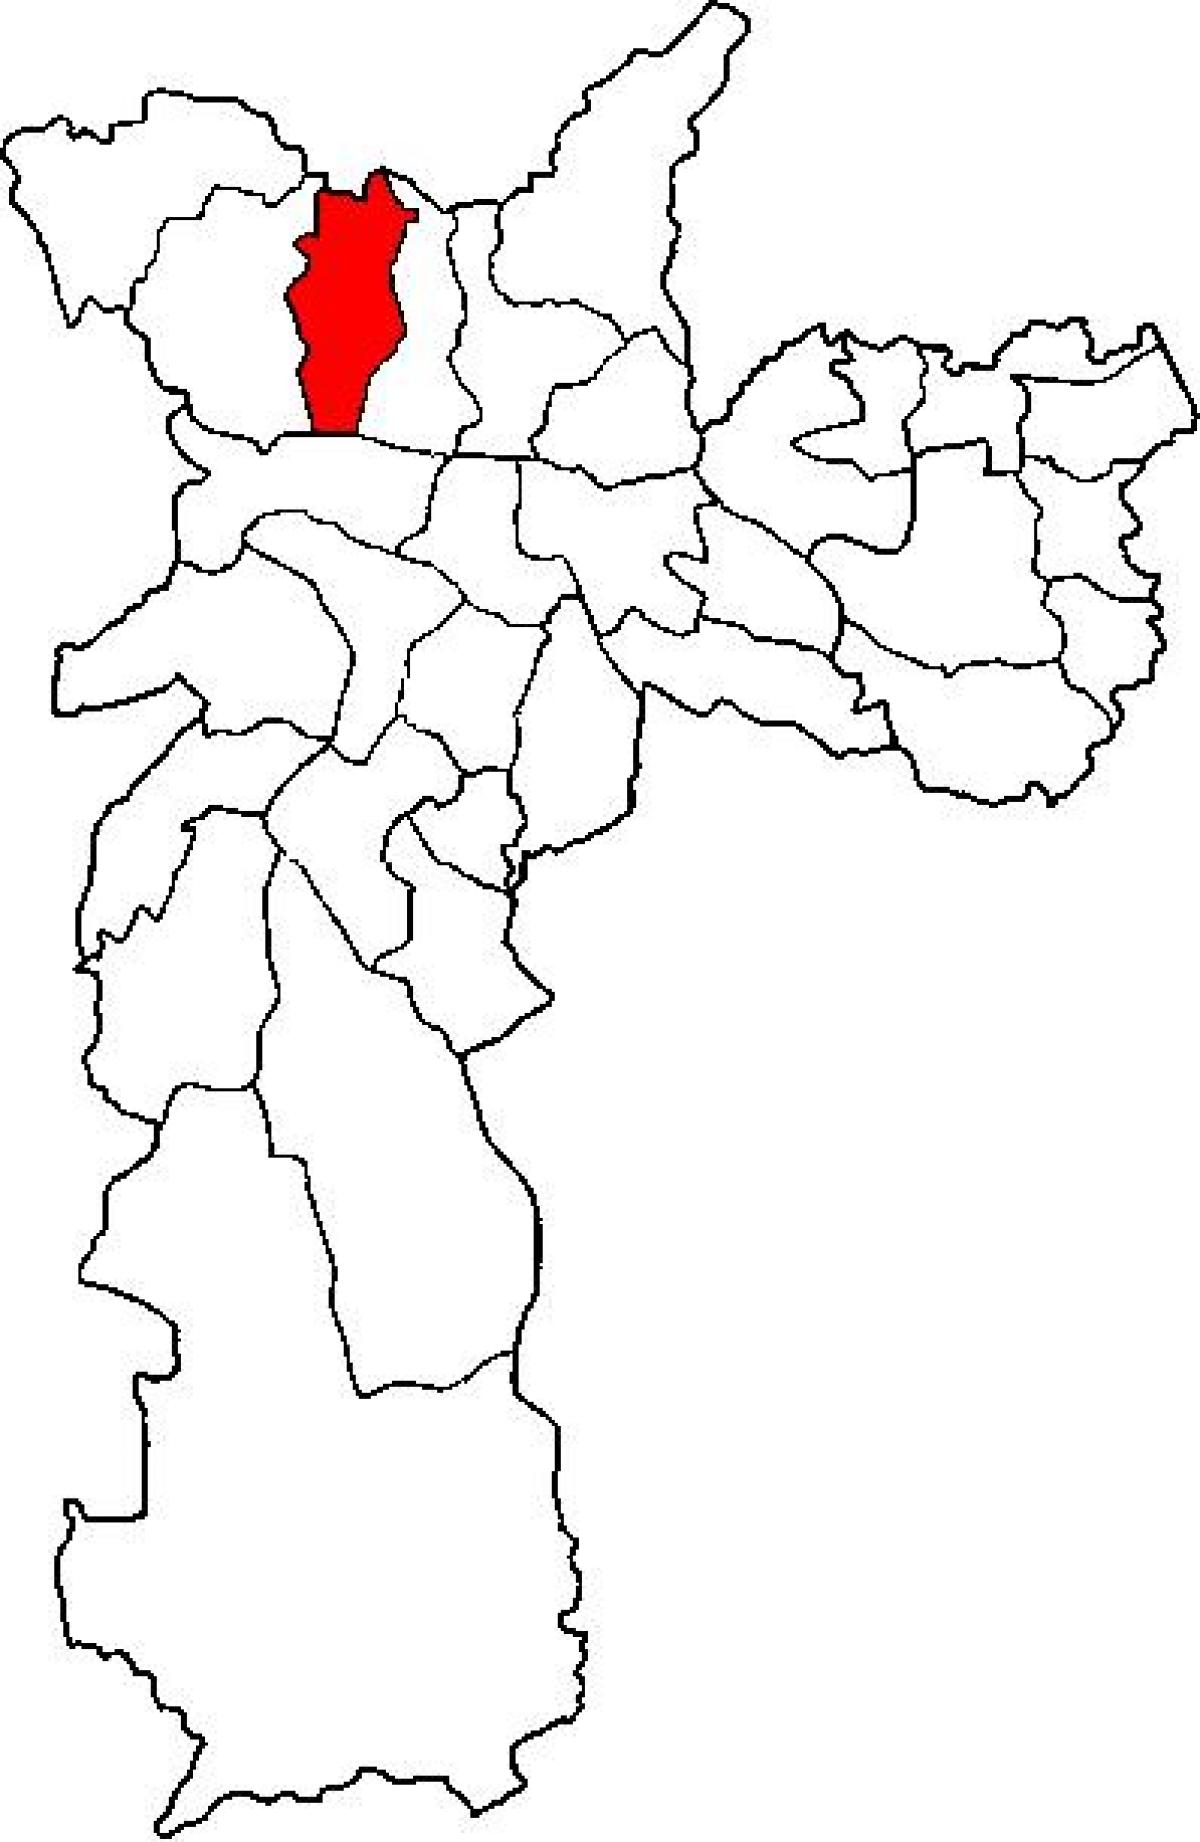 Harta e Freguesia a Ó nën-prefekturës São Paulo